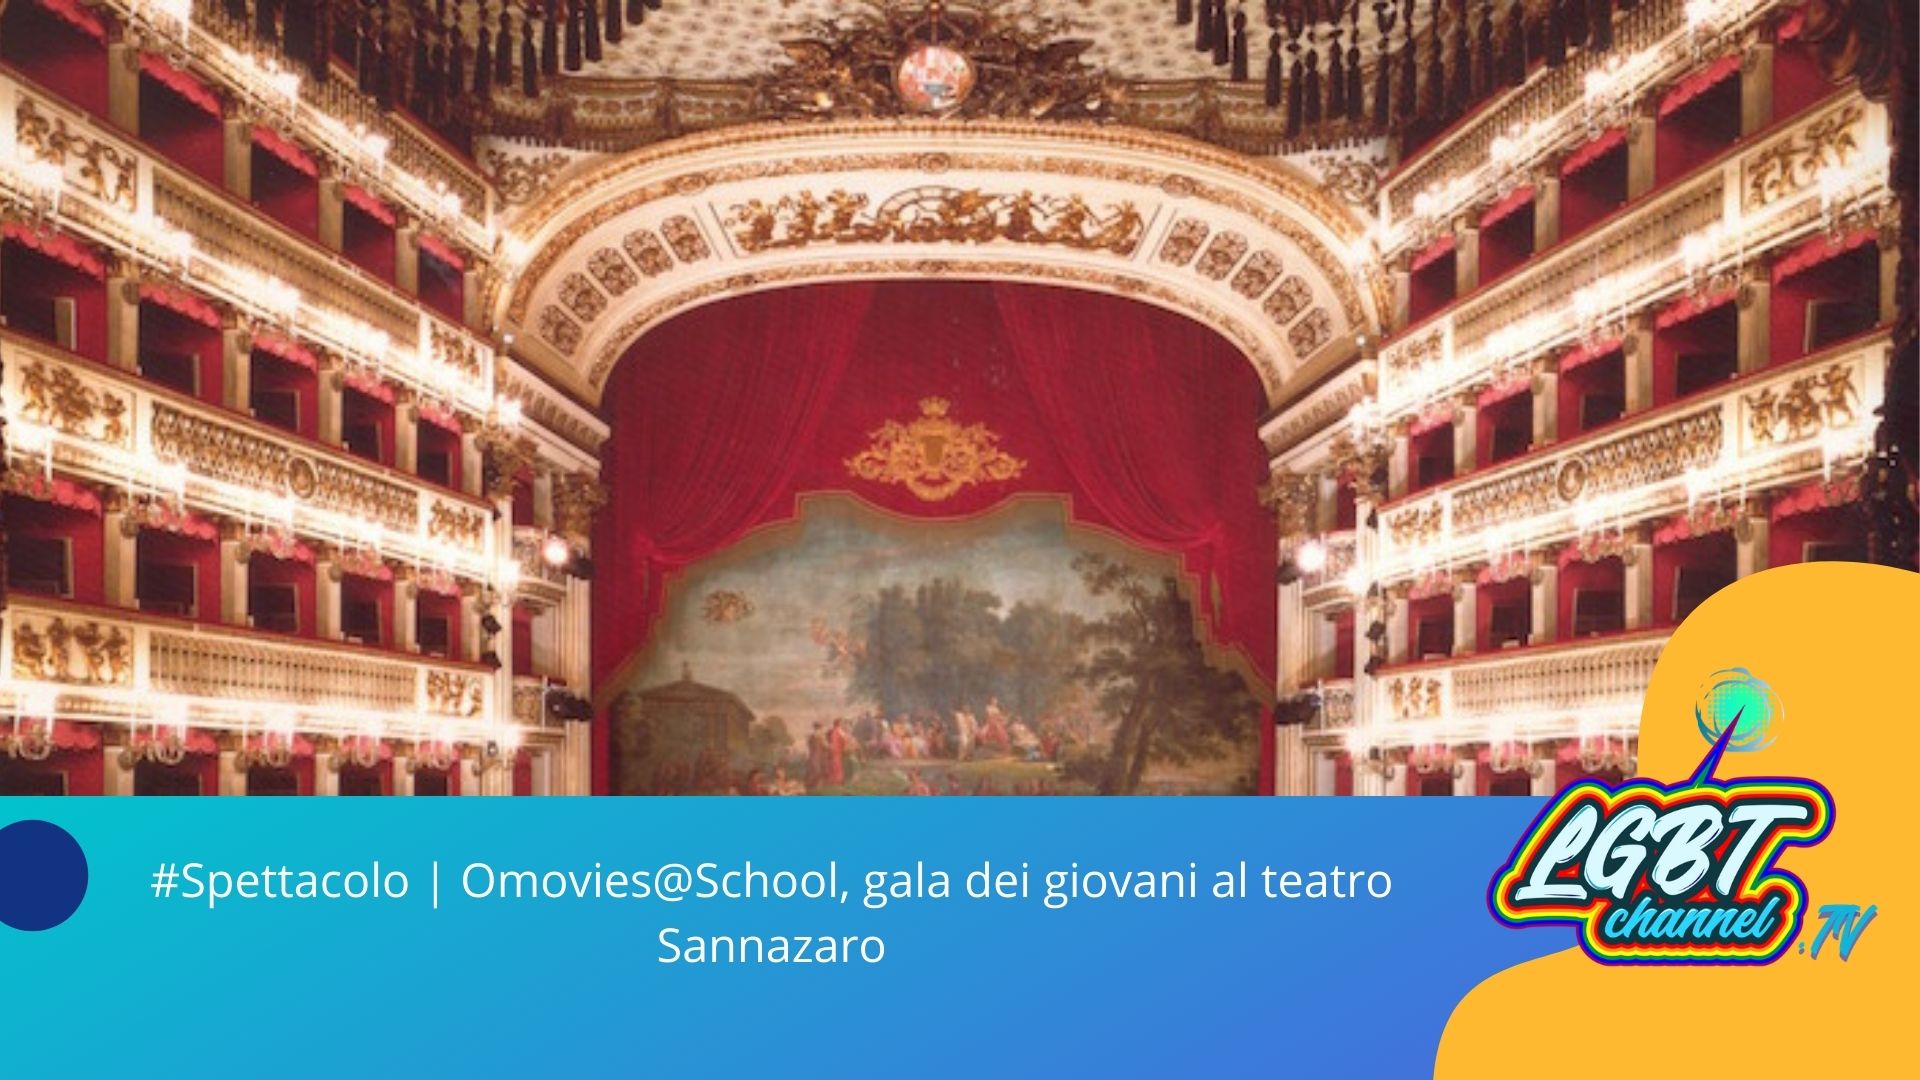 #Spettacolo | Omovies@School 2020, gala dei giovani al teatro Sannazaro